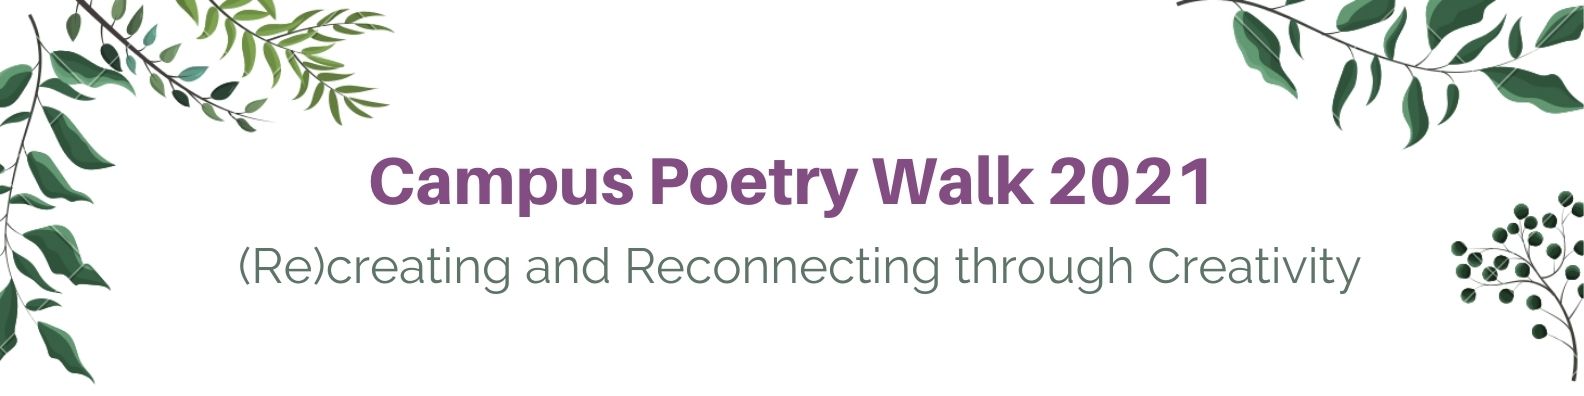 Campus Poetry Walk 2021